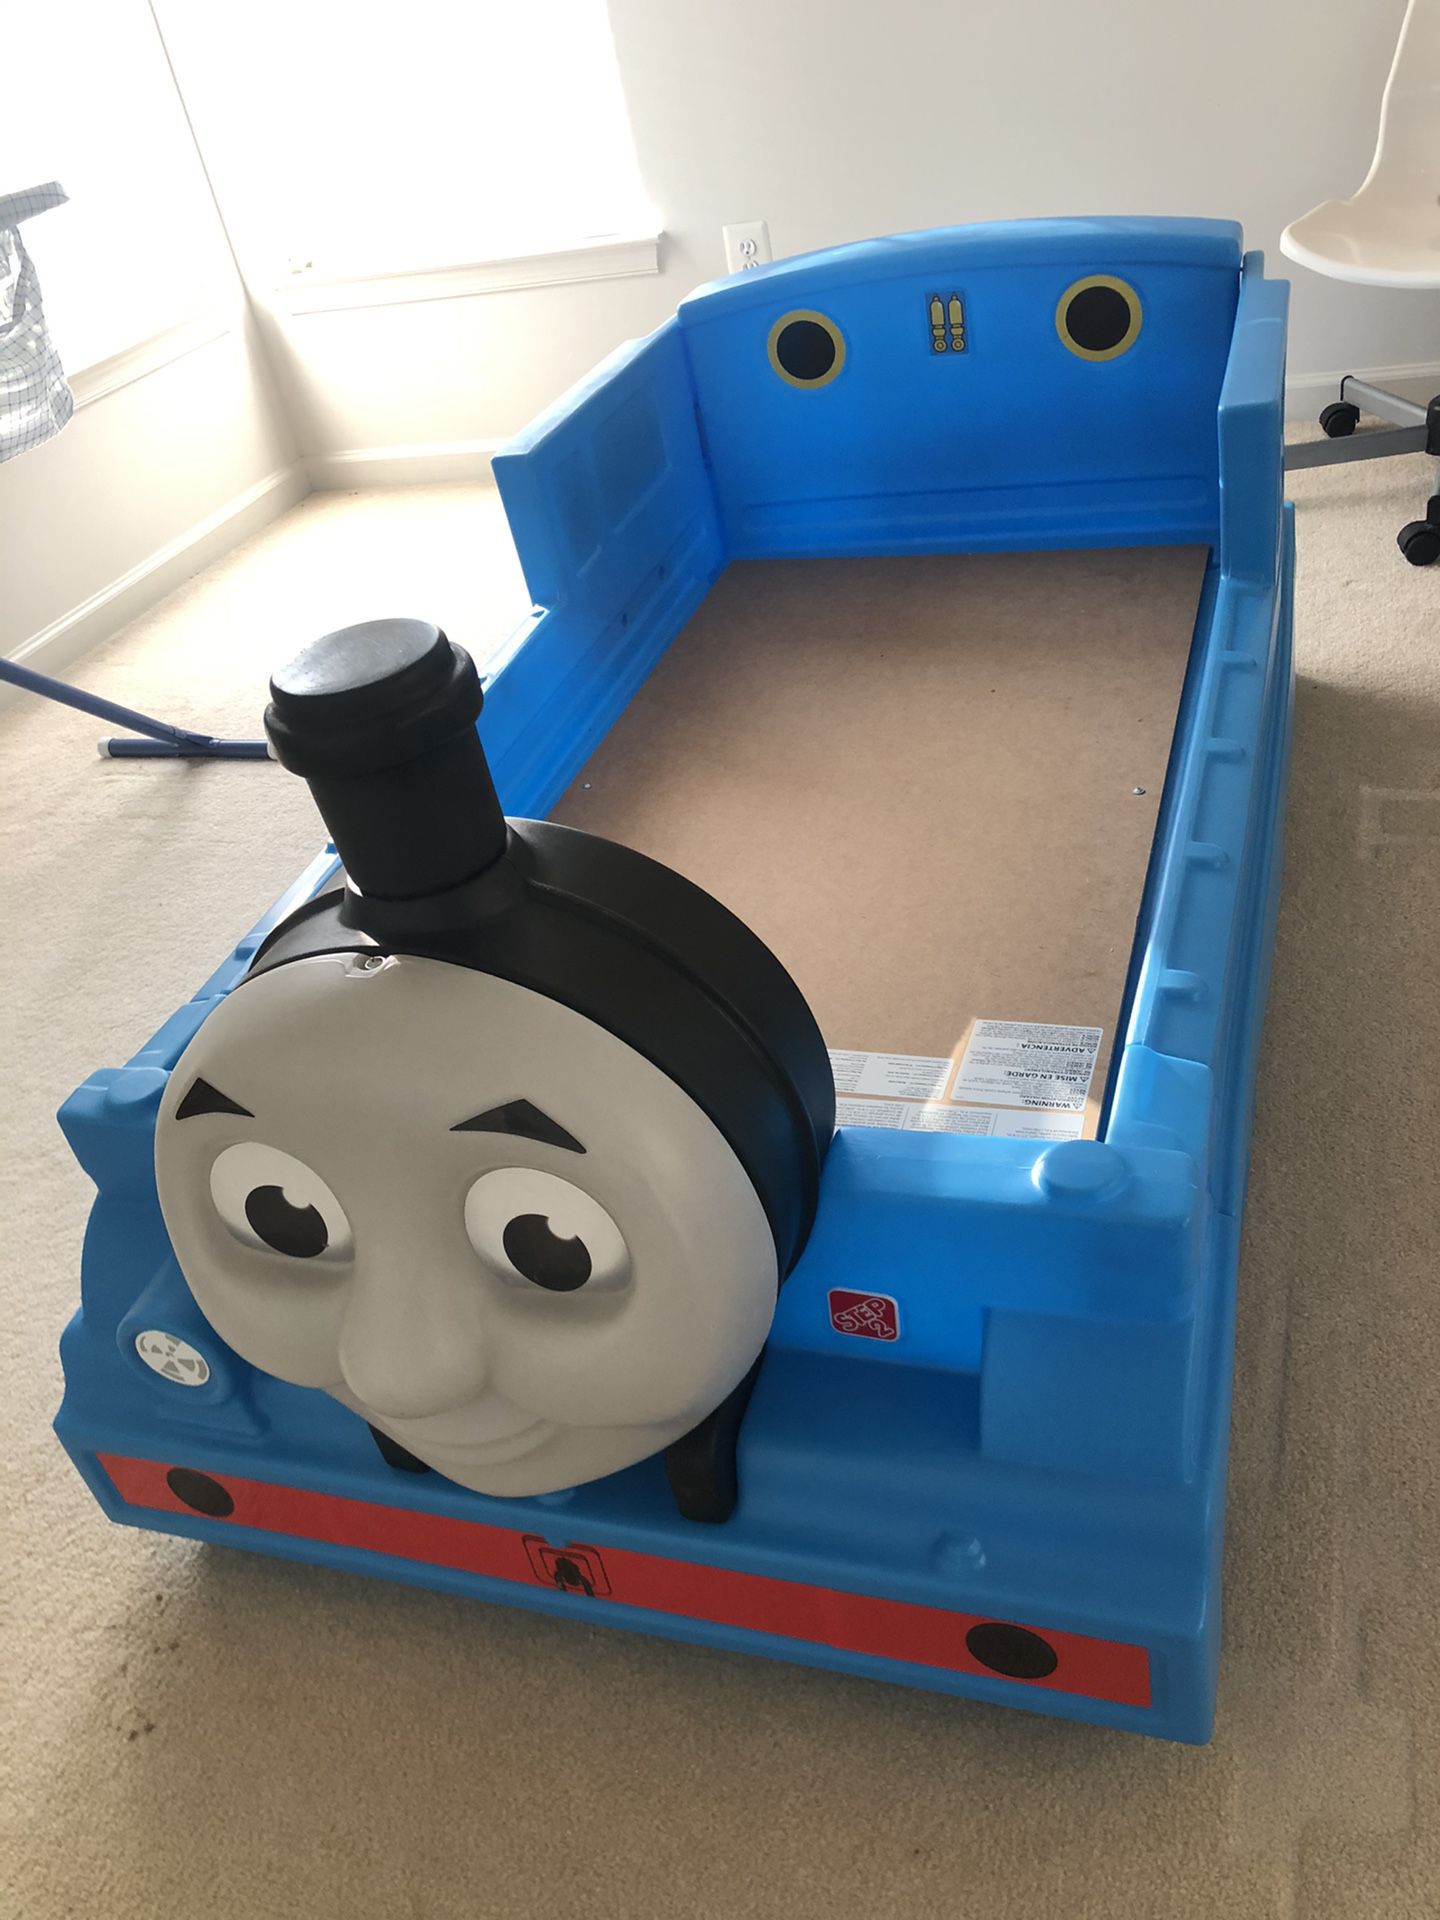 Thomas the Train Bed